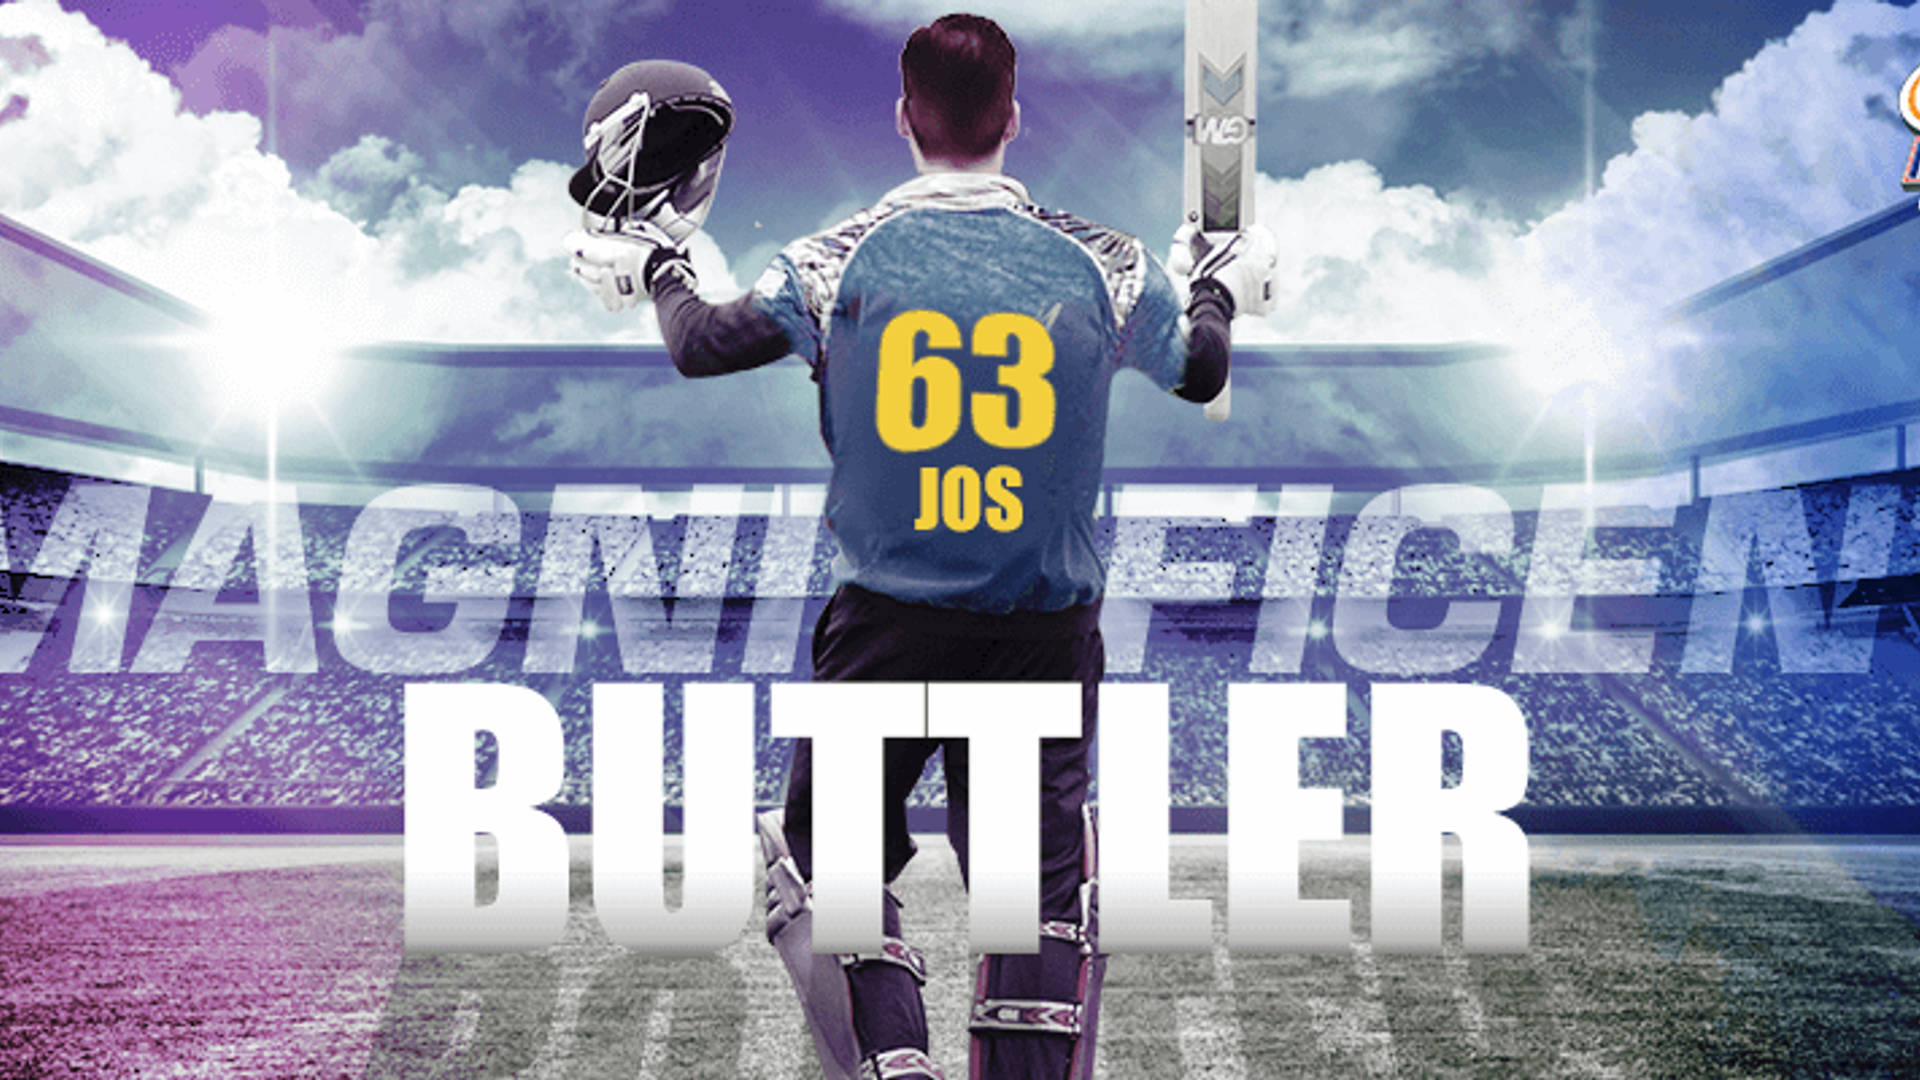 Magnificent Jos Buttler Poster